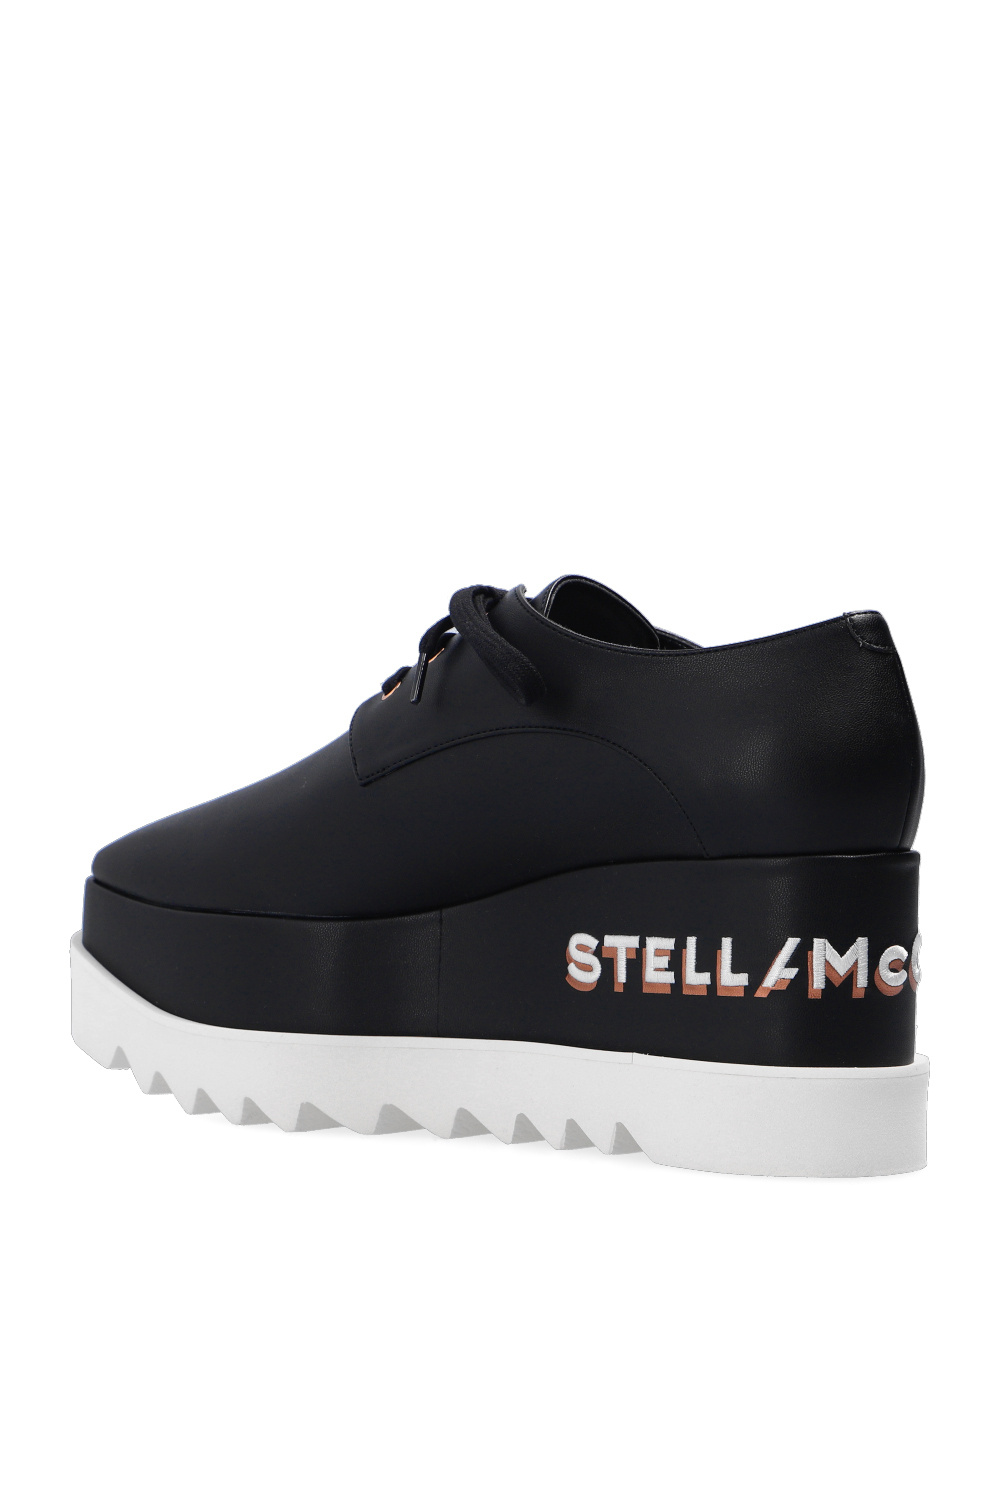 Stella McCartney Wedge shoes